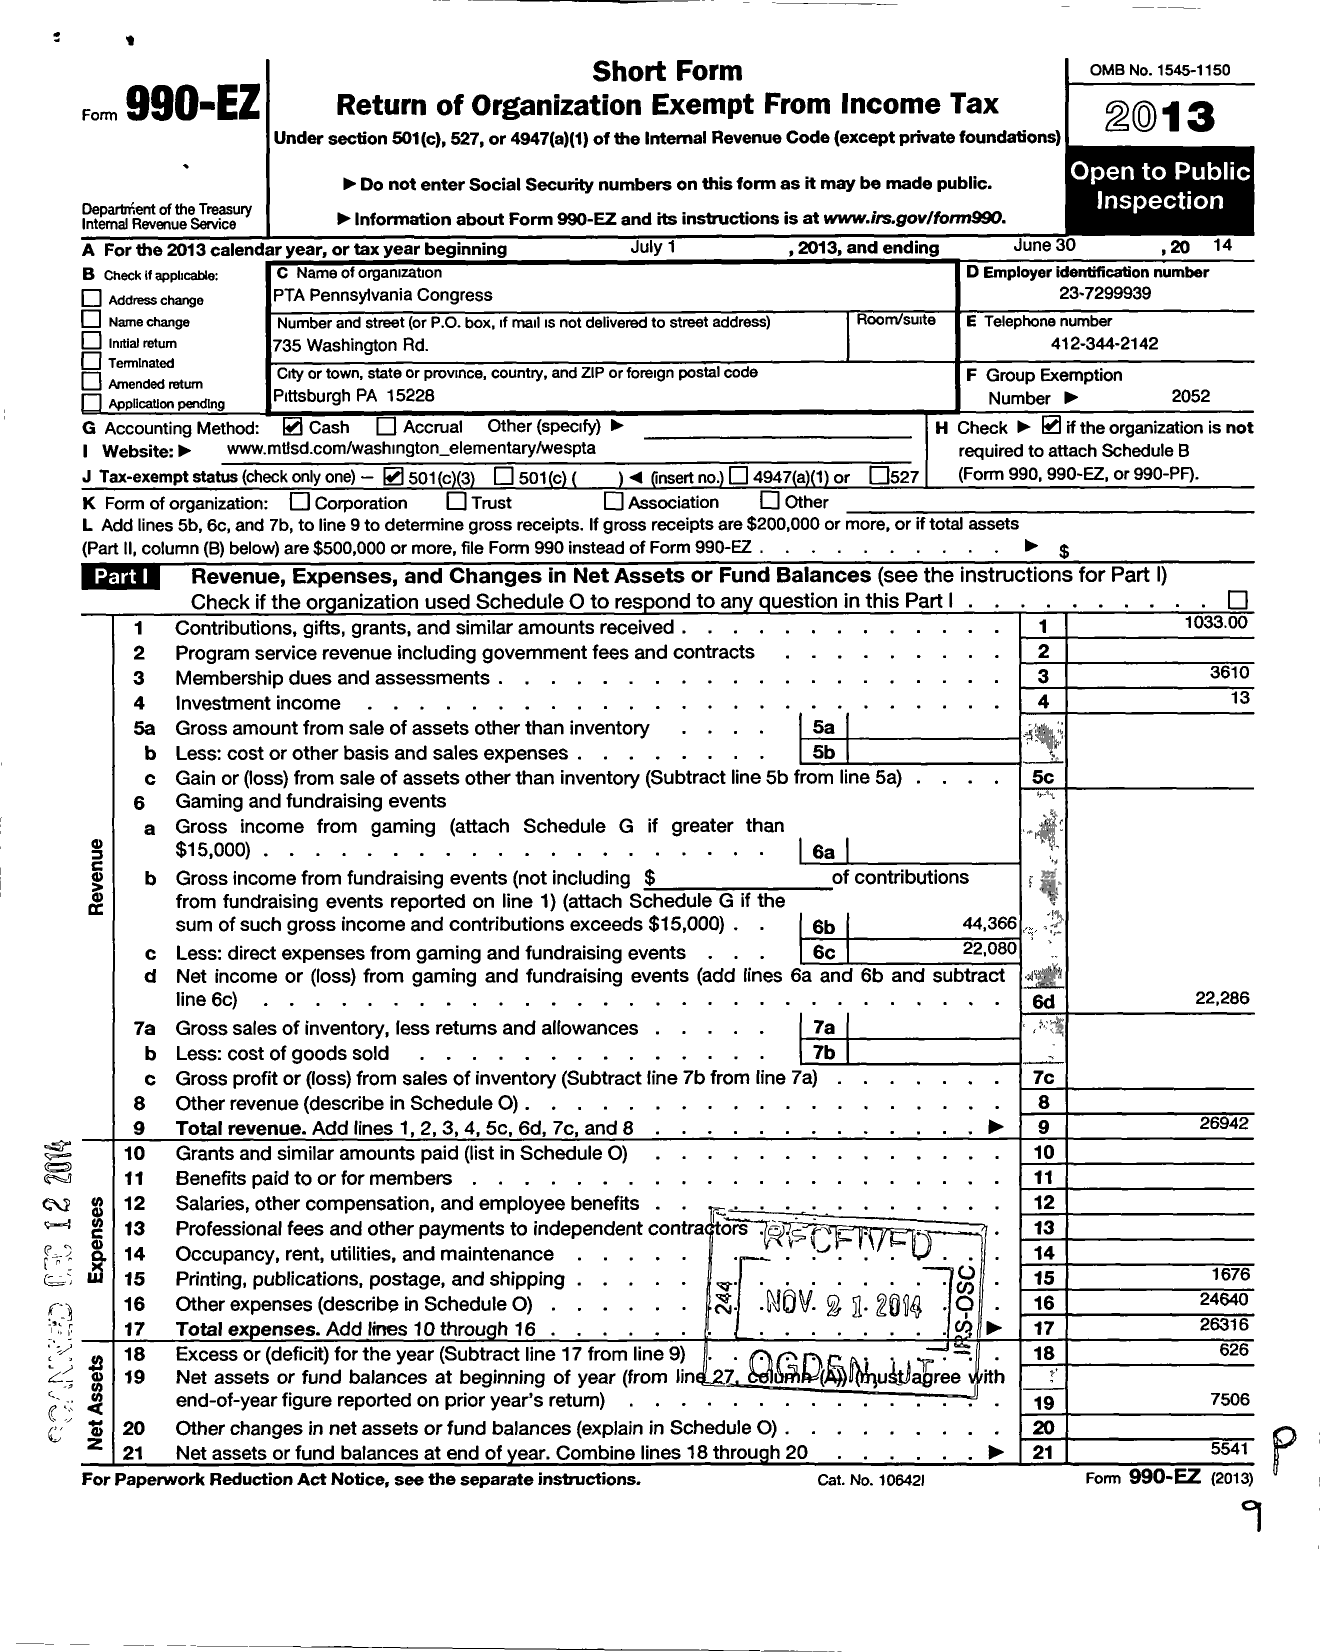 Image of first page of 2013 Form 990EZ for PTA Pennsylvania Congress / Washington Elem School PTA Inc